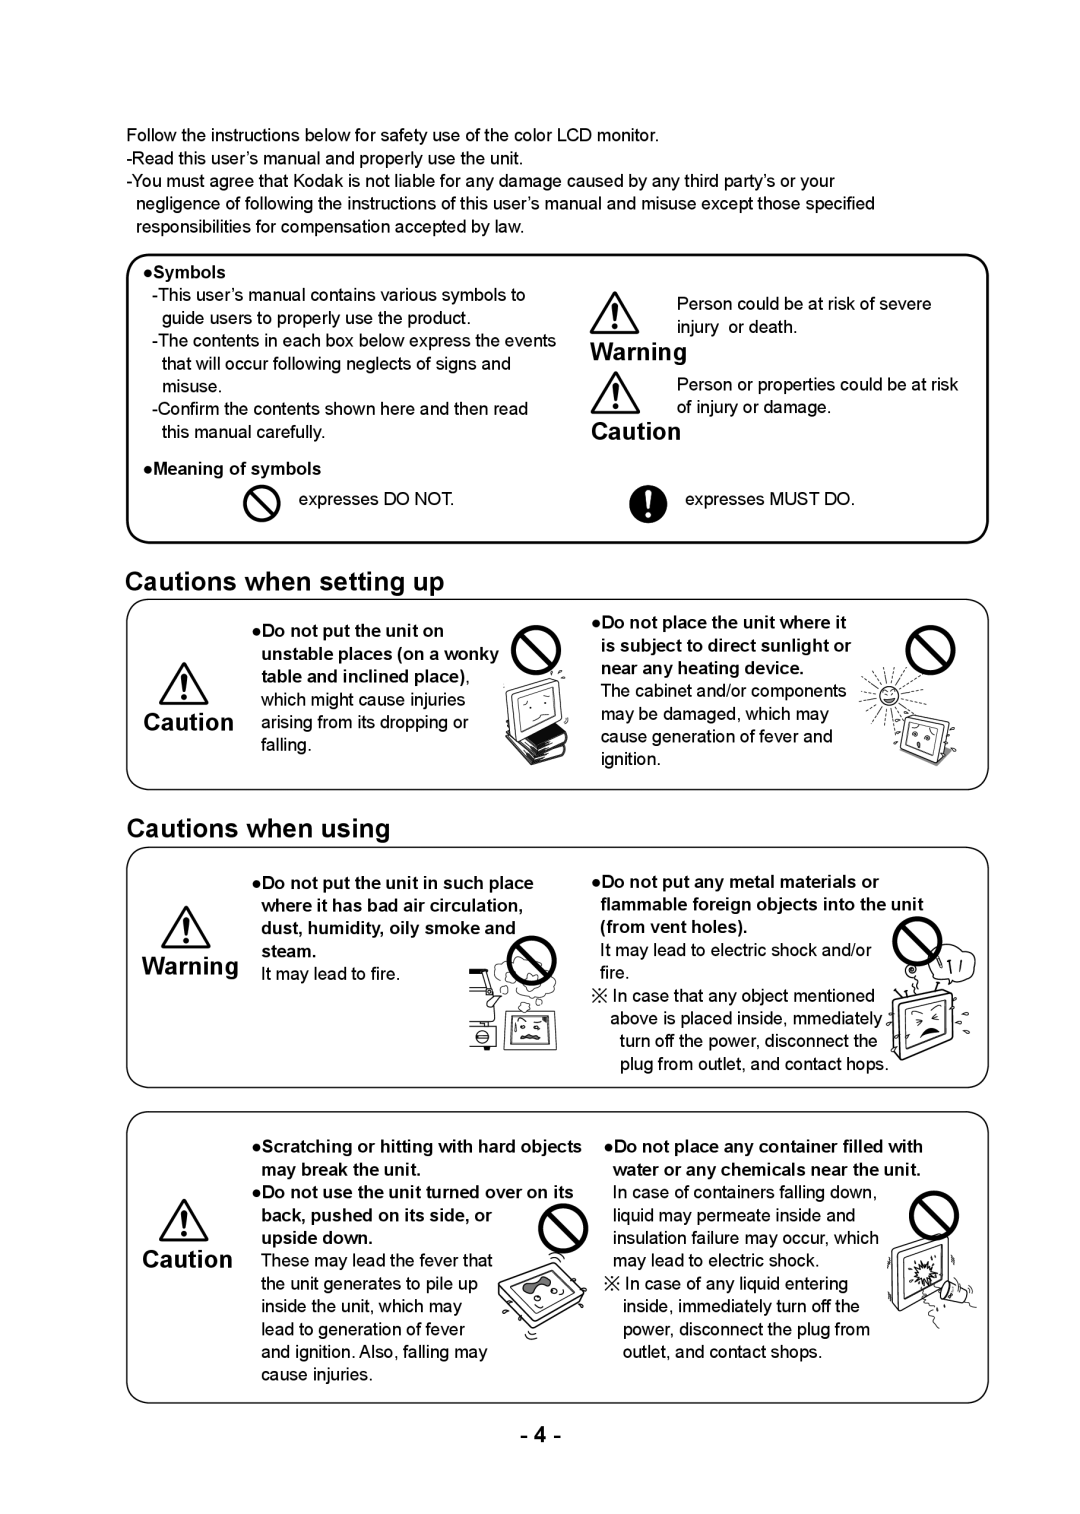 Kodak DV3MC user manual Cautions when setting up, Cautions when using 